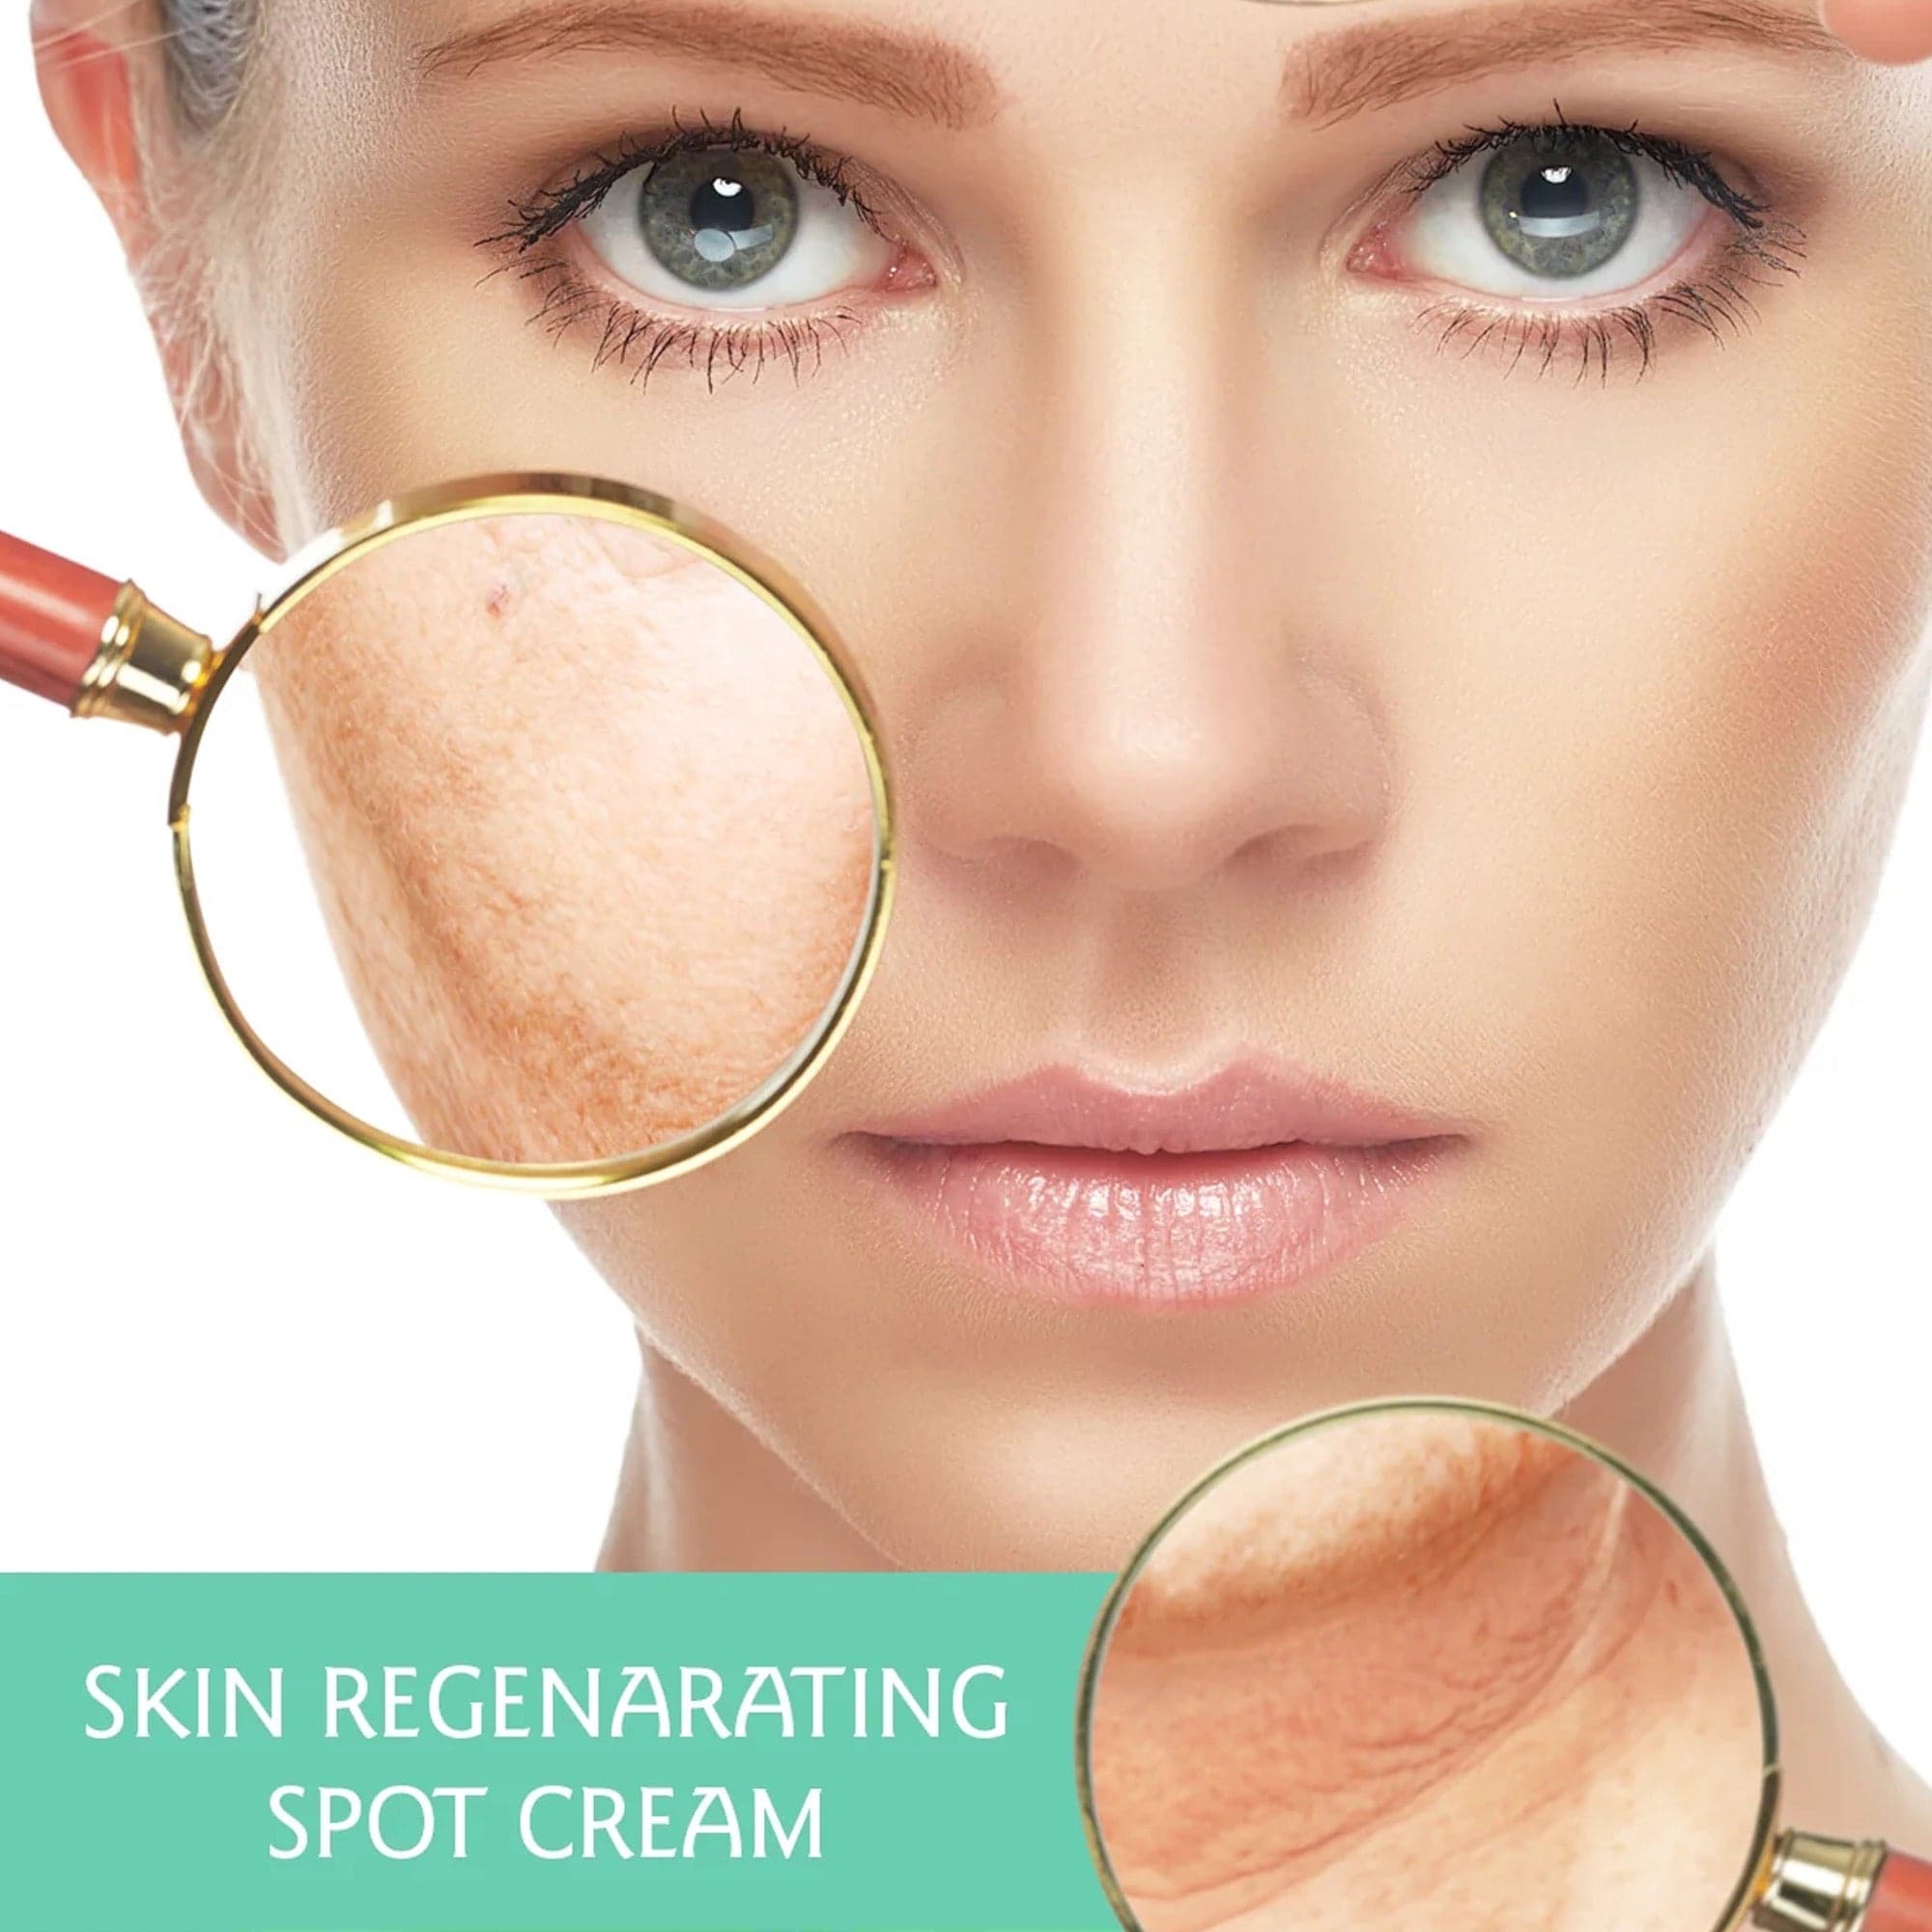 Dr.Clinic - Skin Regenarating Spot Cream 50ml - Eson Direct